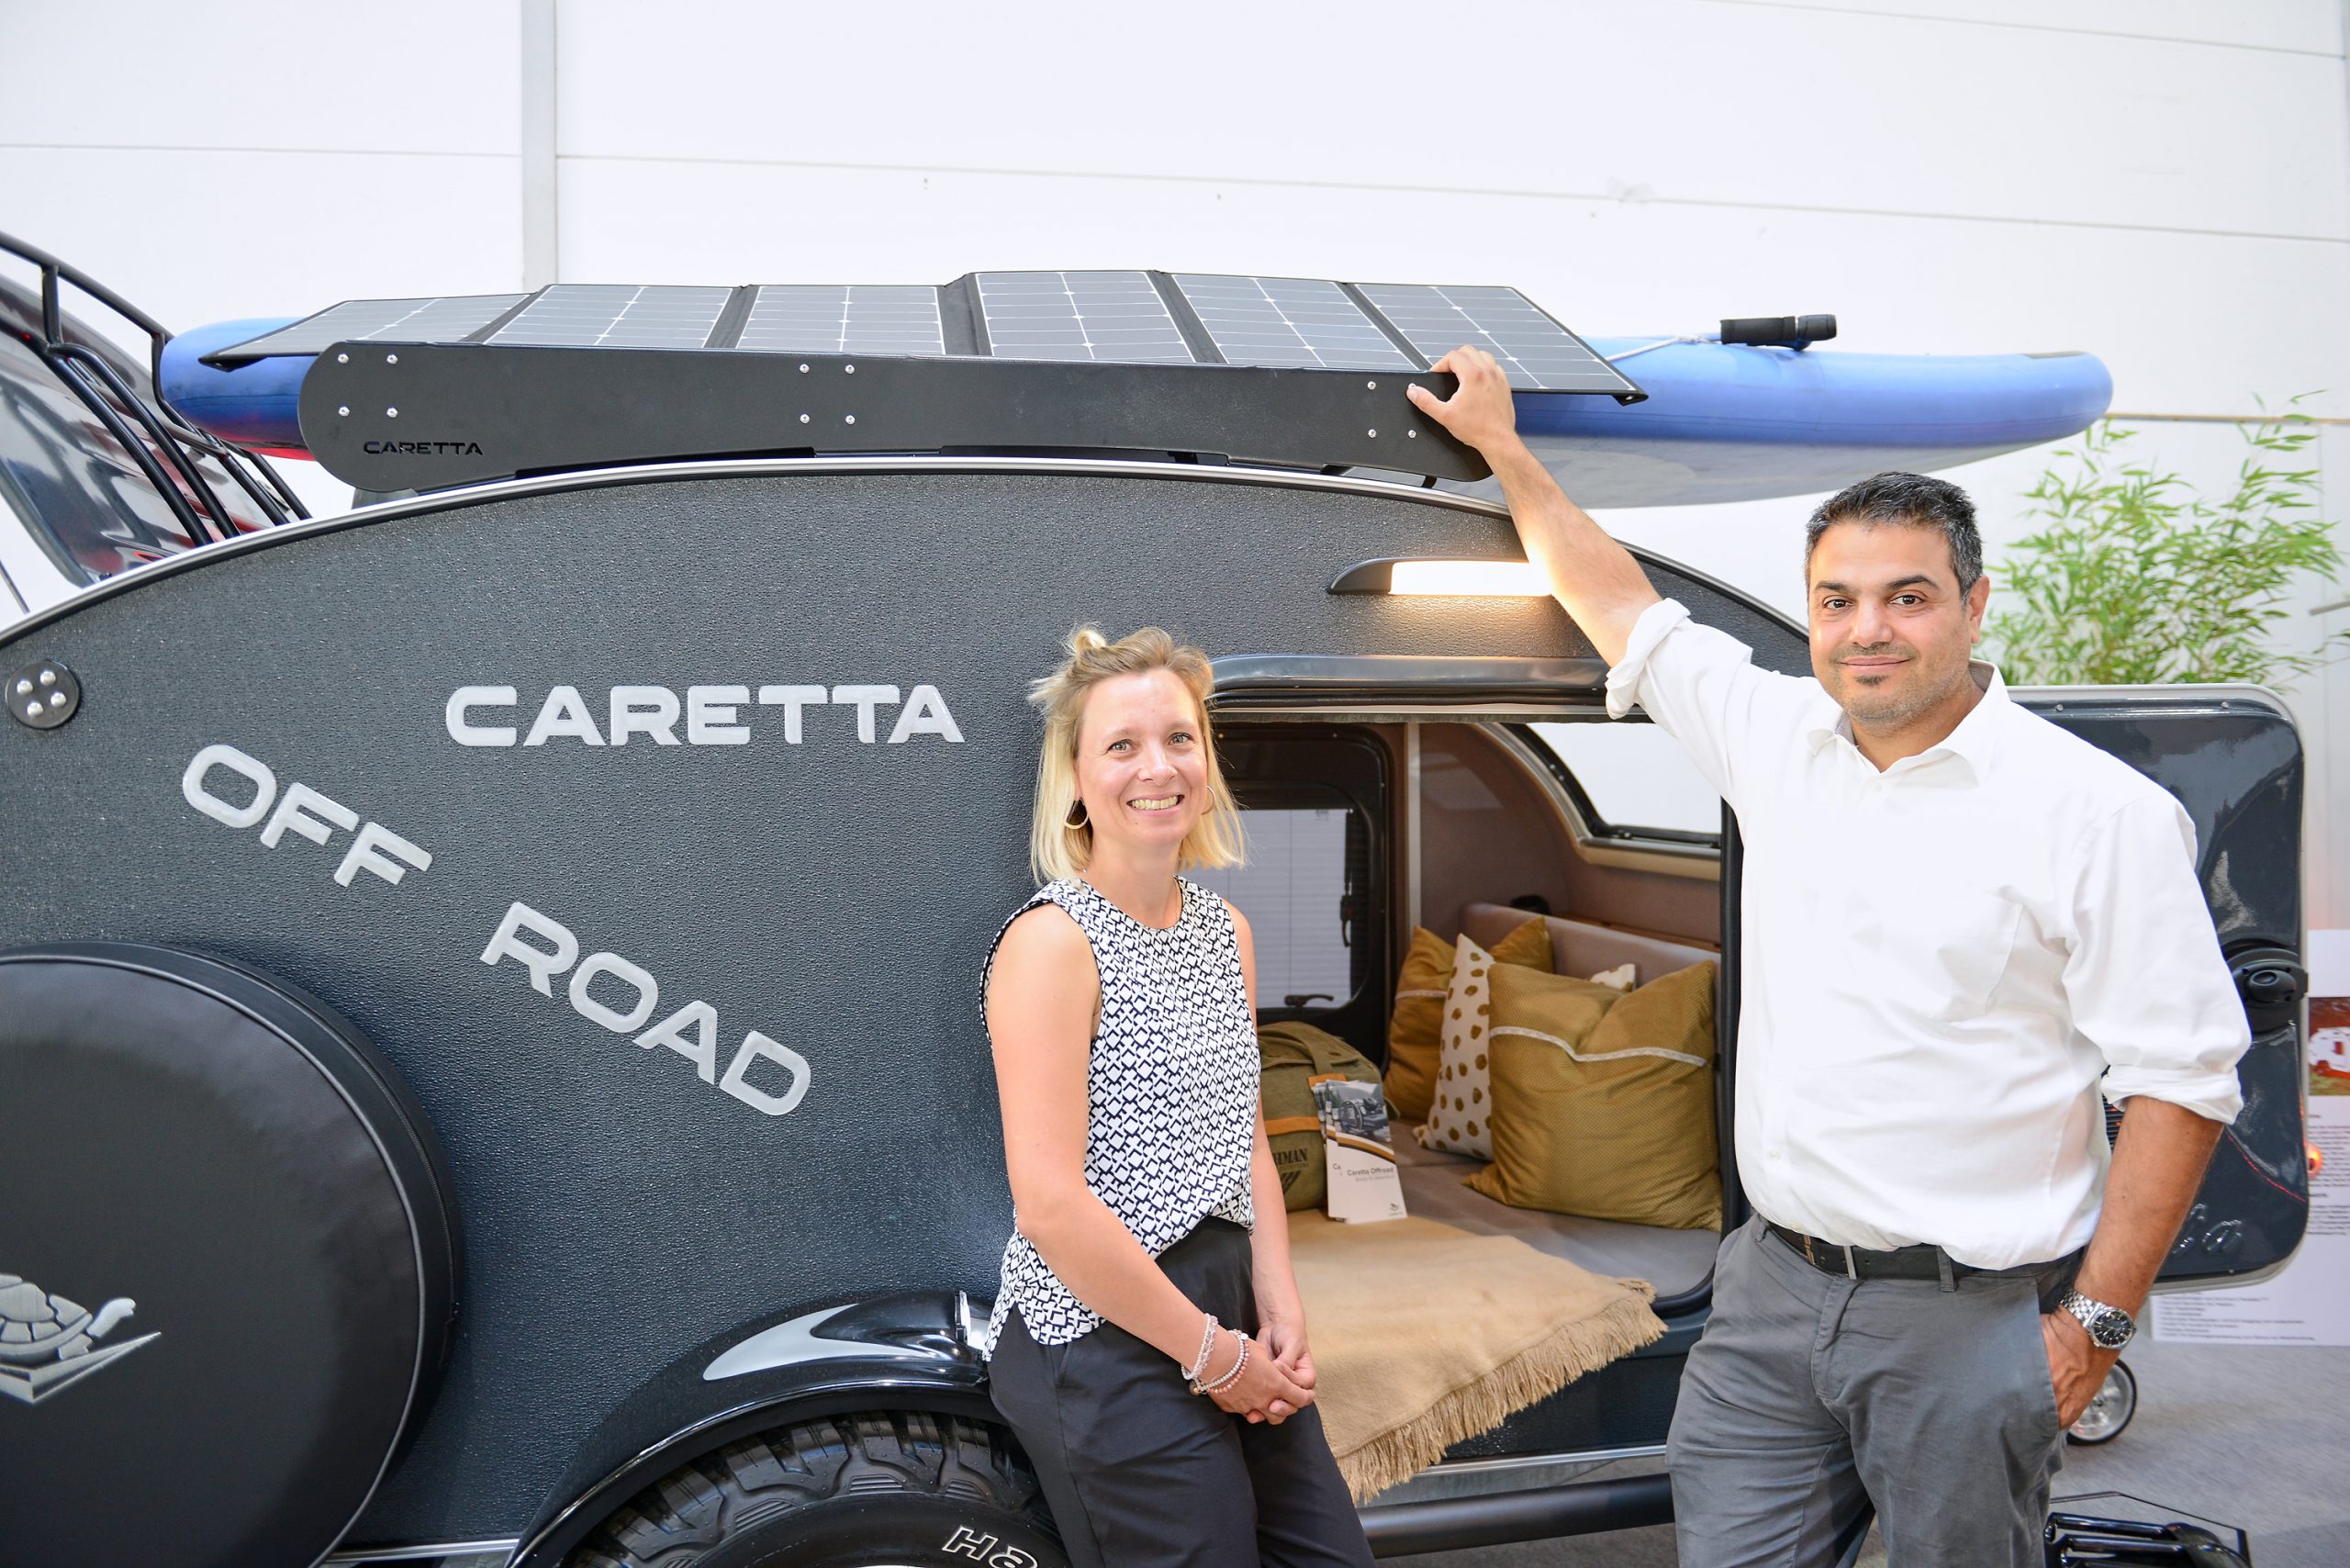 Caretta Caravans  Miniwohnwagen & Wohnwagen